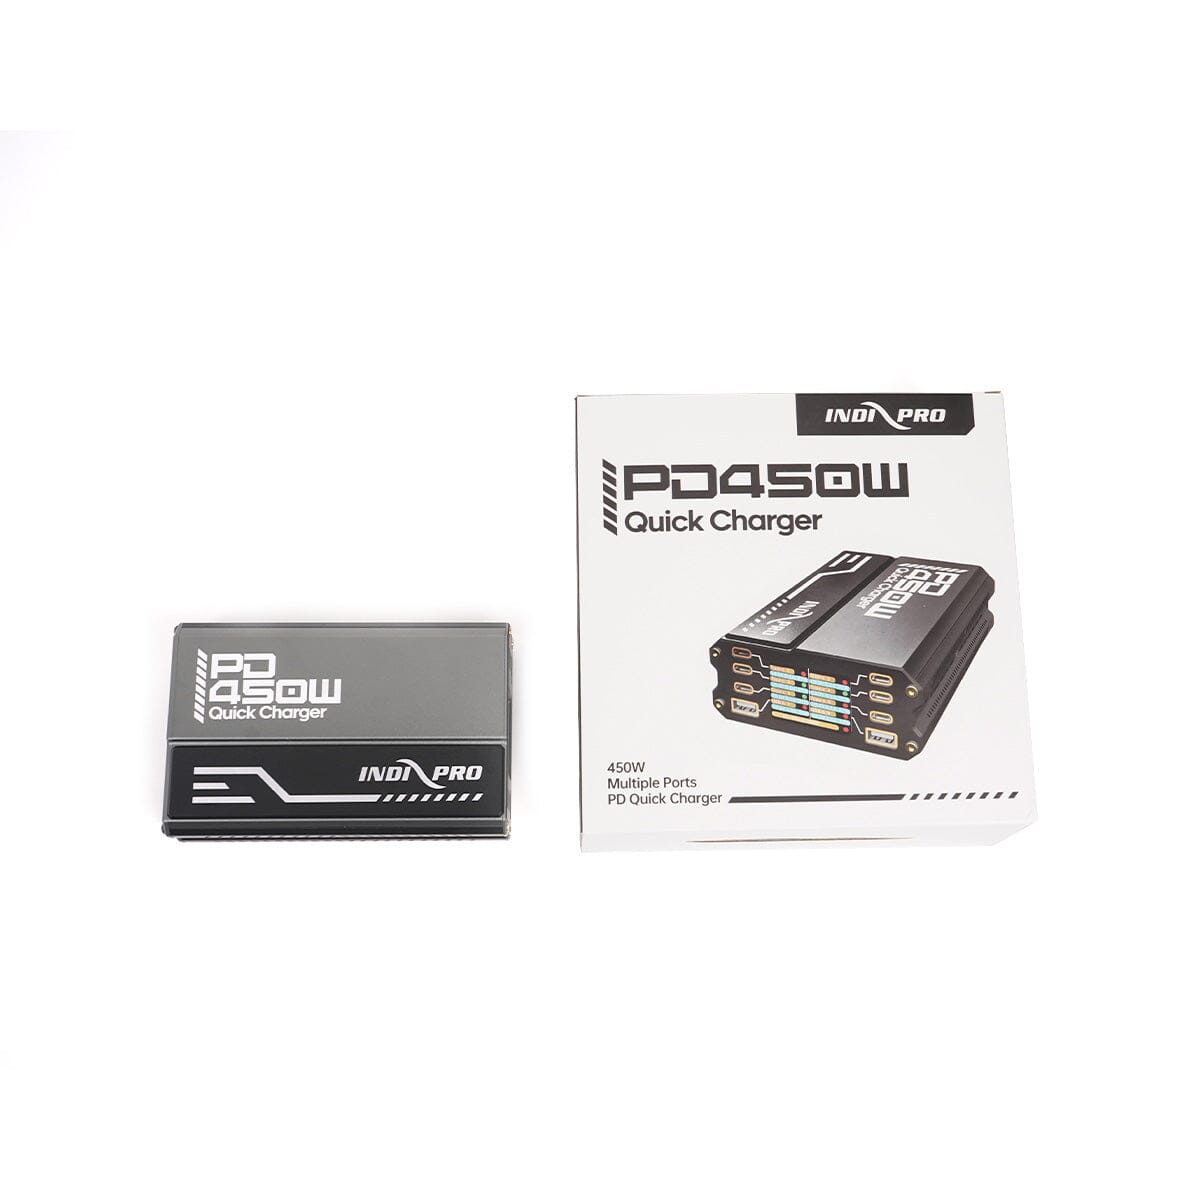 Indipro PD450Wh Intelligent Fast Charging Box Power Bundle Indipro Tools 